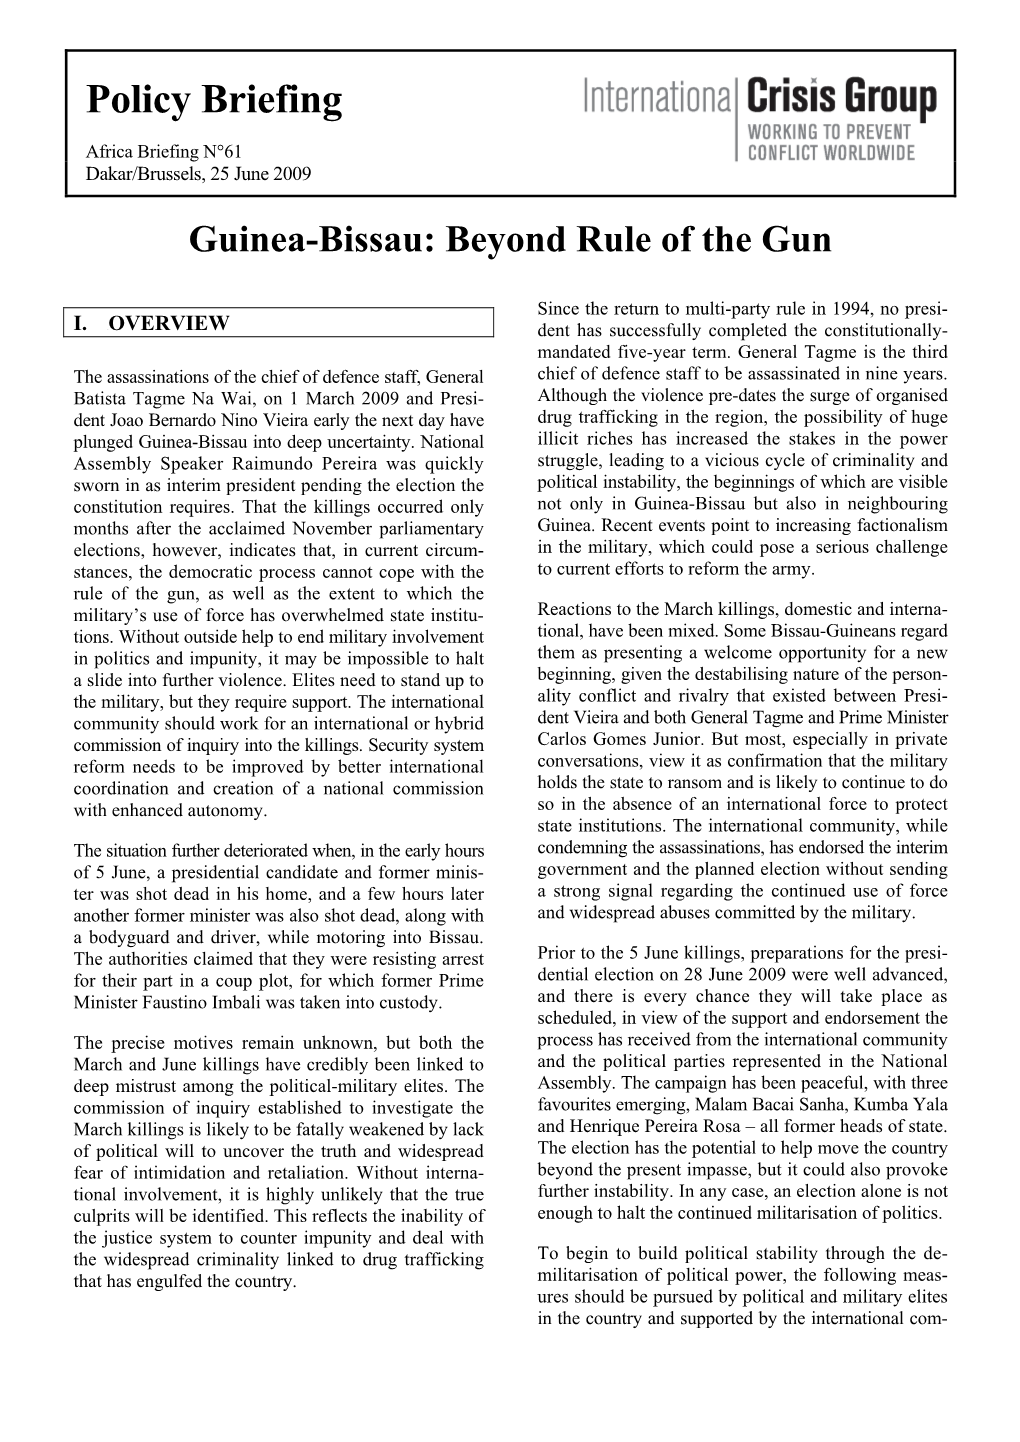 Guinea-Bissau: Beyond Rule of the Gun